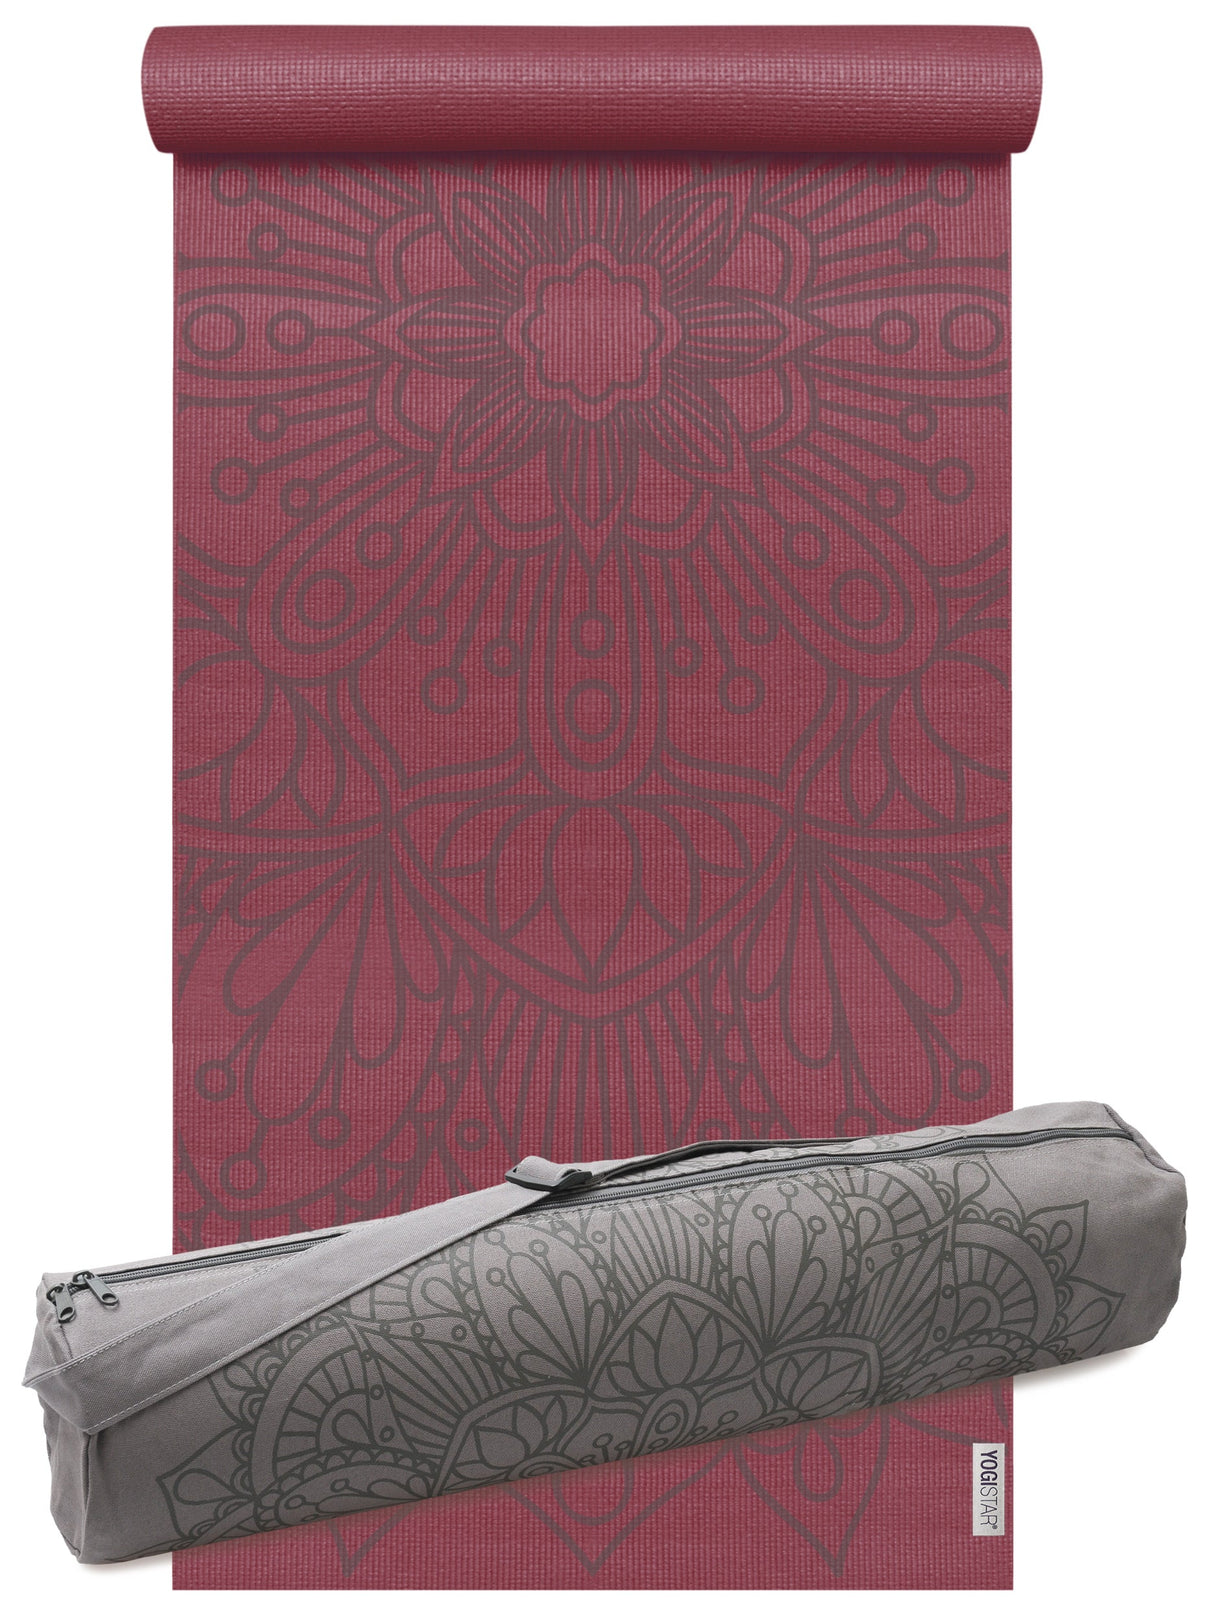 Yoga-Set Starter Edition - lotus mandala (Yogamatte + Yogatasche) - bordeaux